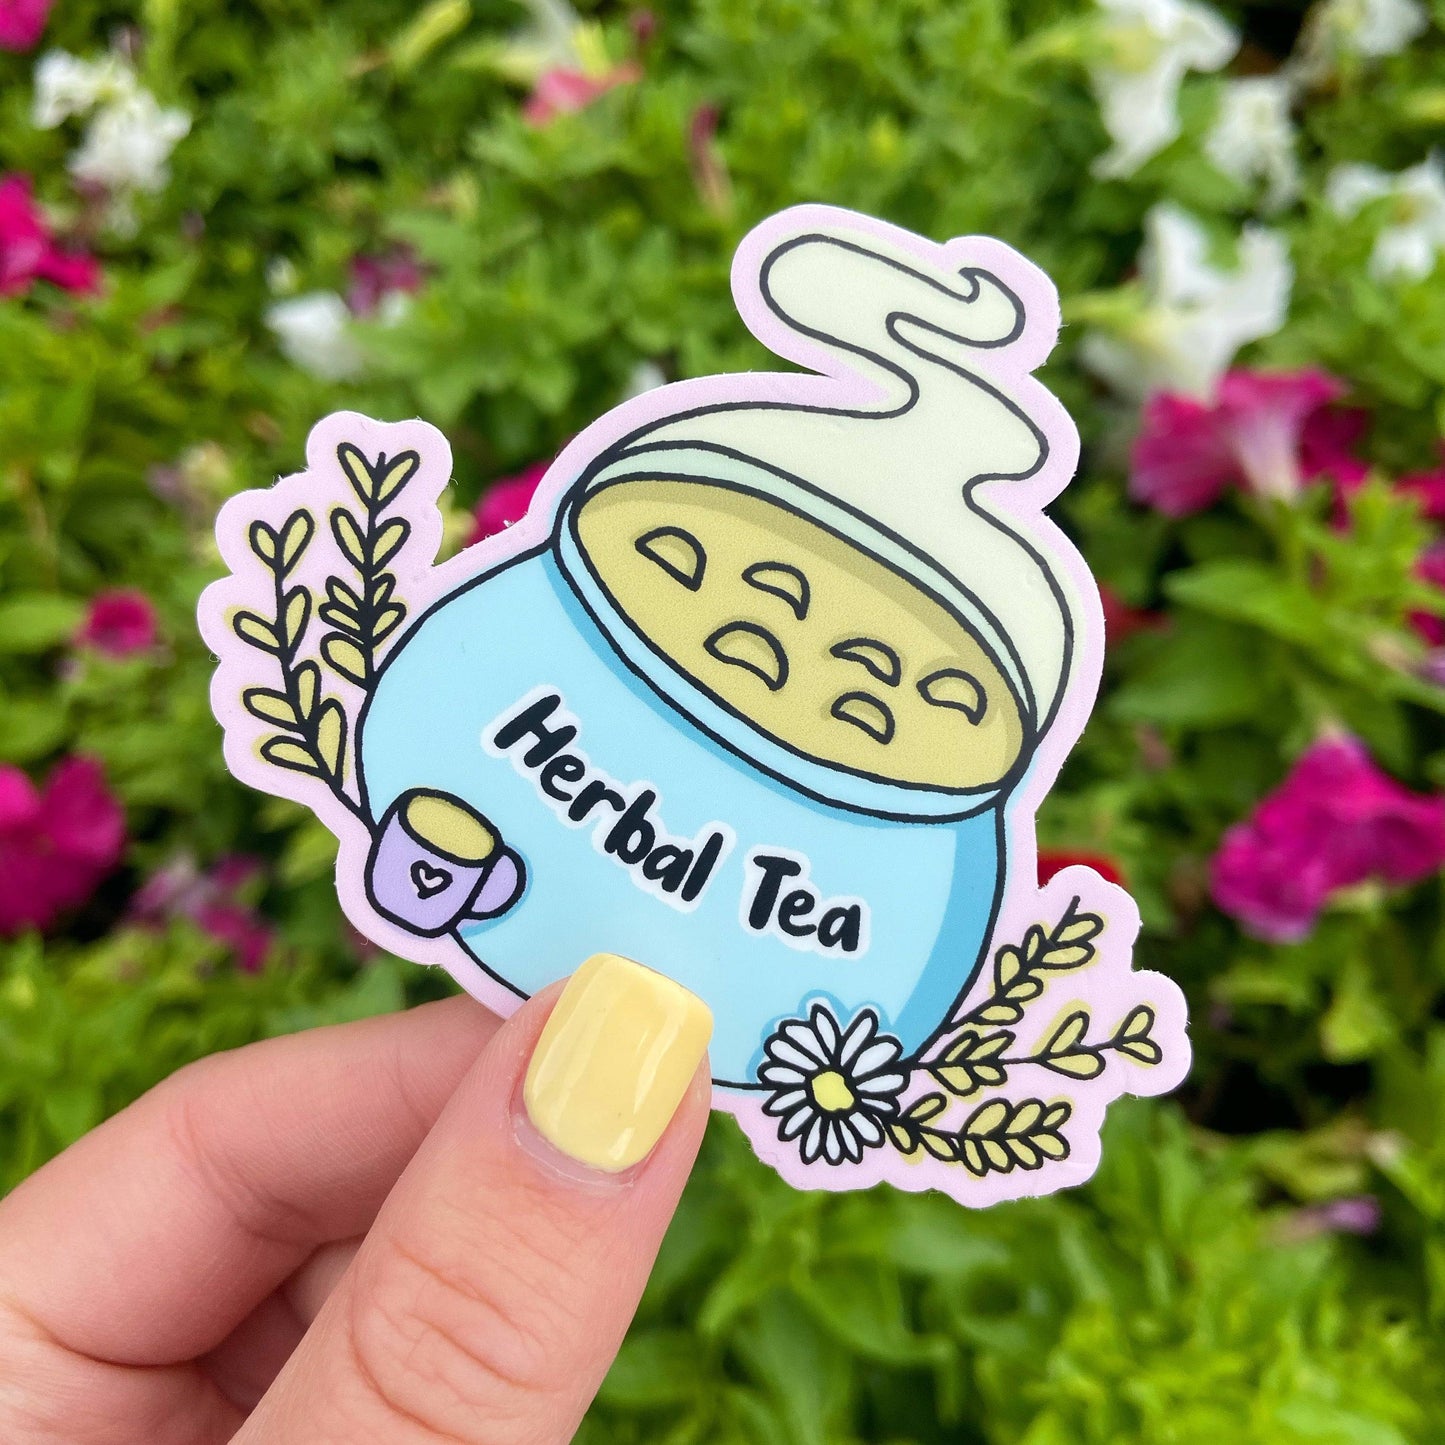 Herbal Tea Sticker Harvest Moon Gemz